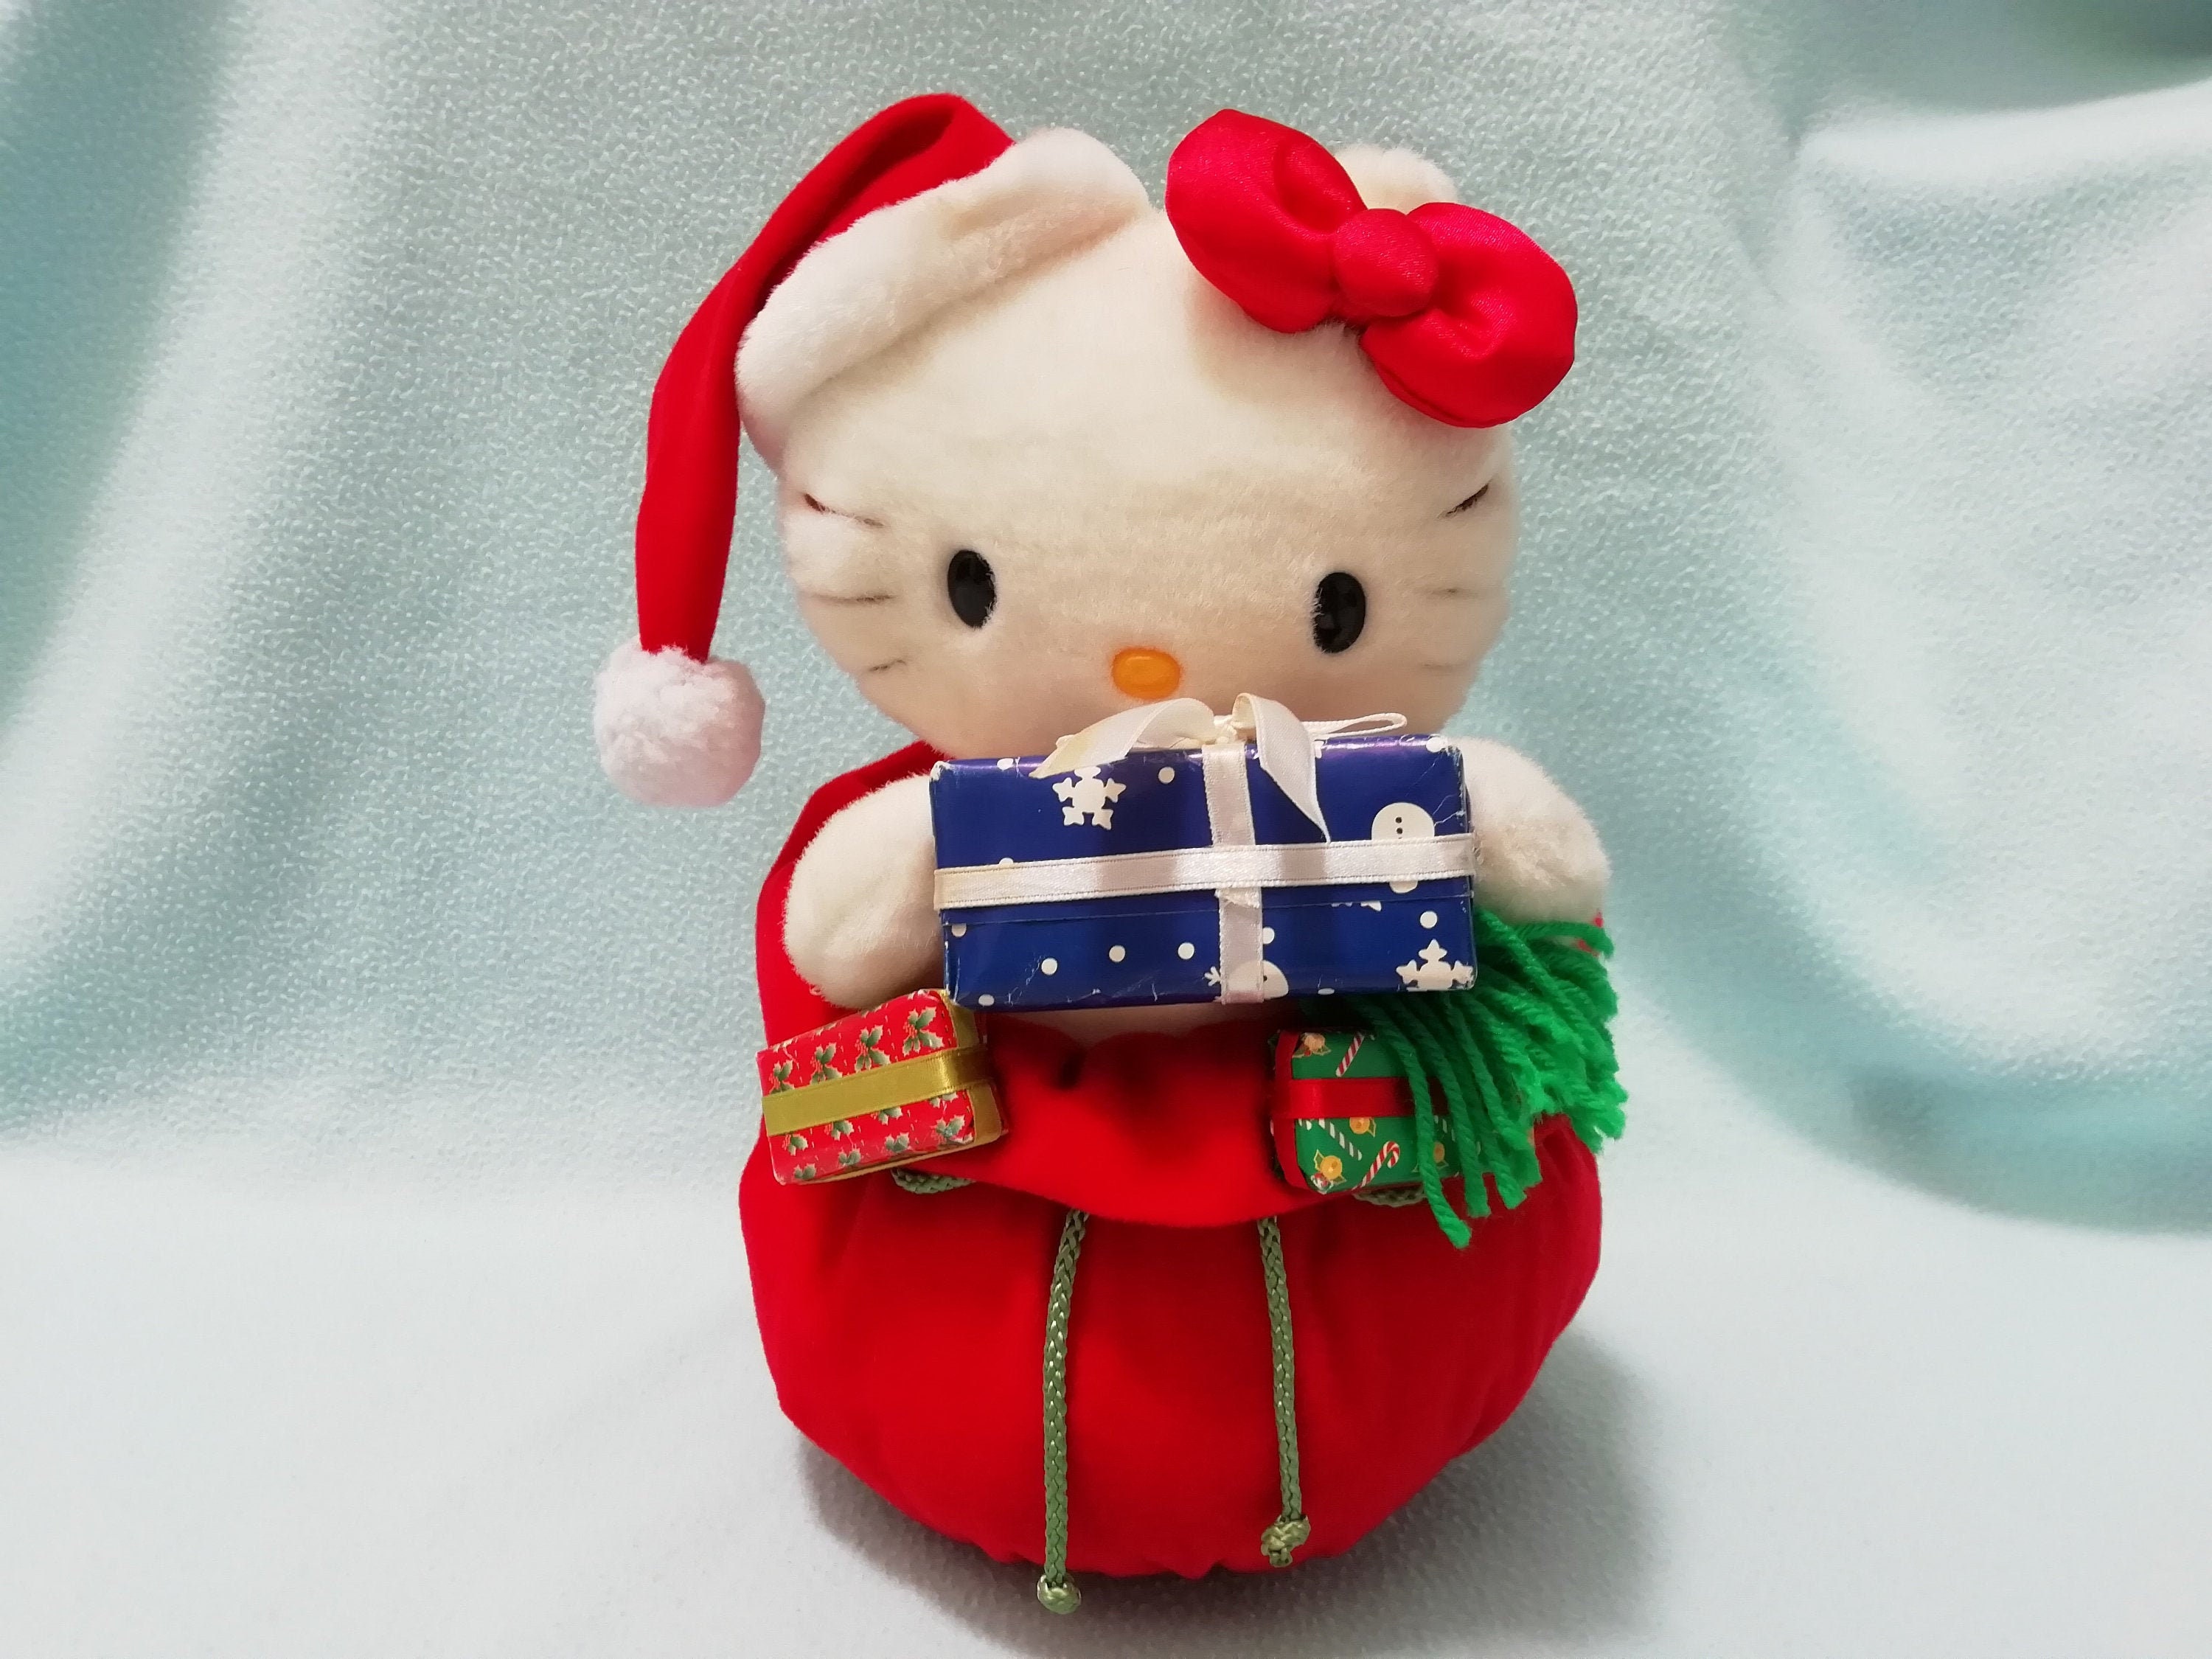 Sanrio Hello Kitty 9" Stuffed Animal Anime Plush Toy Christmas gift Cat Figure